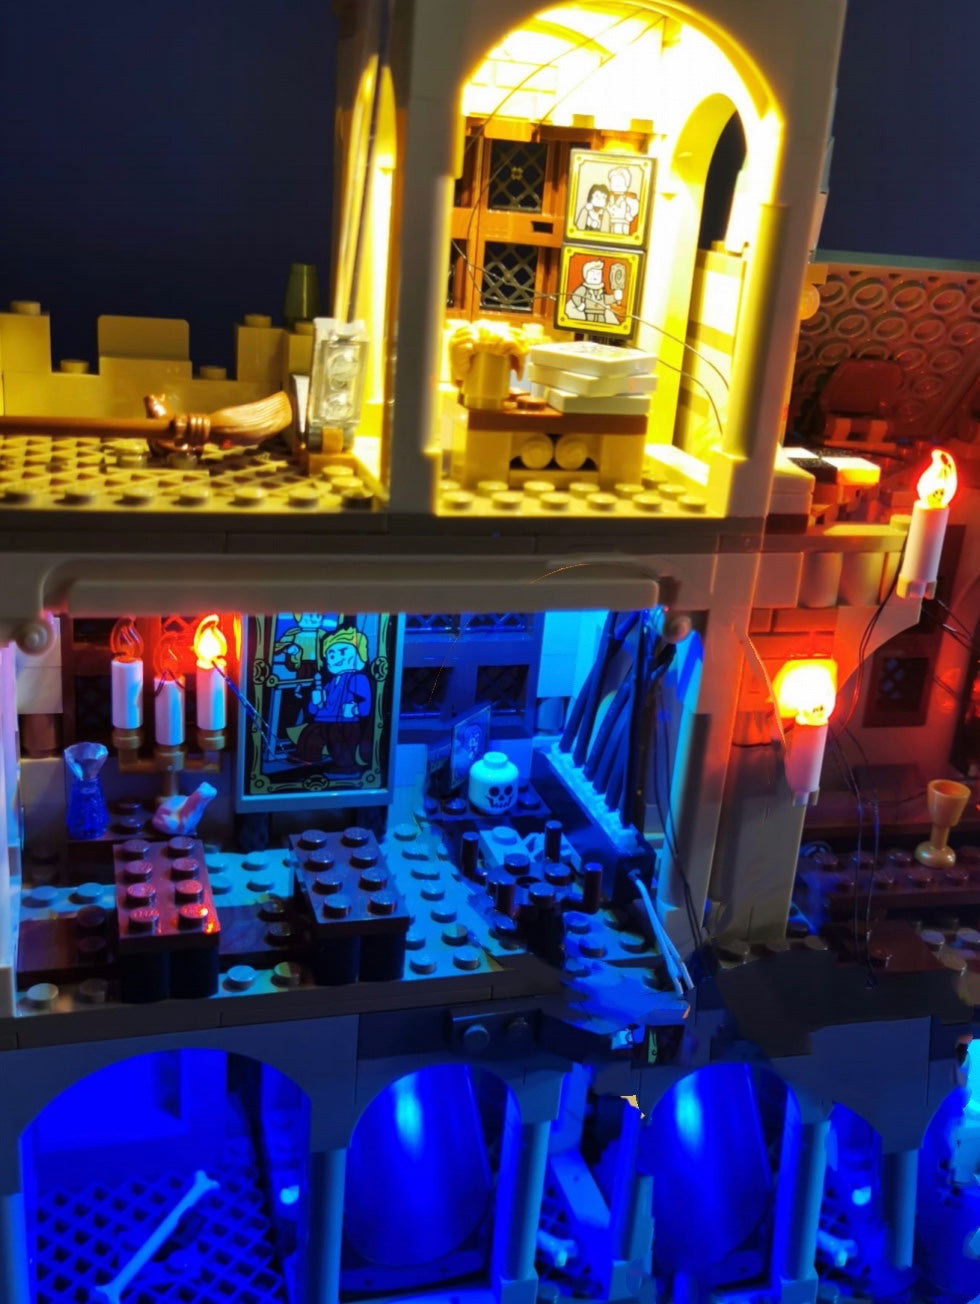 Lego 76389 Harry Potter Hogwarts Chamber of Secrets